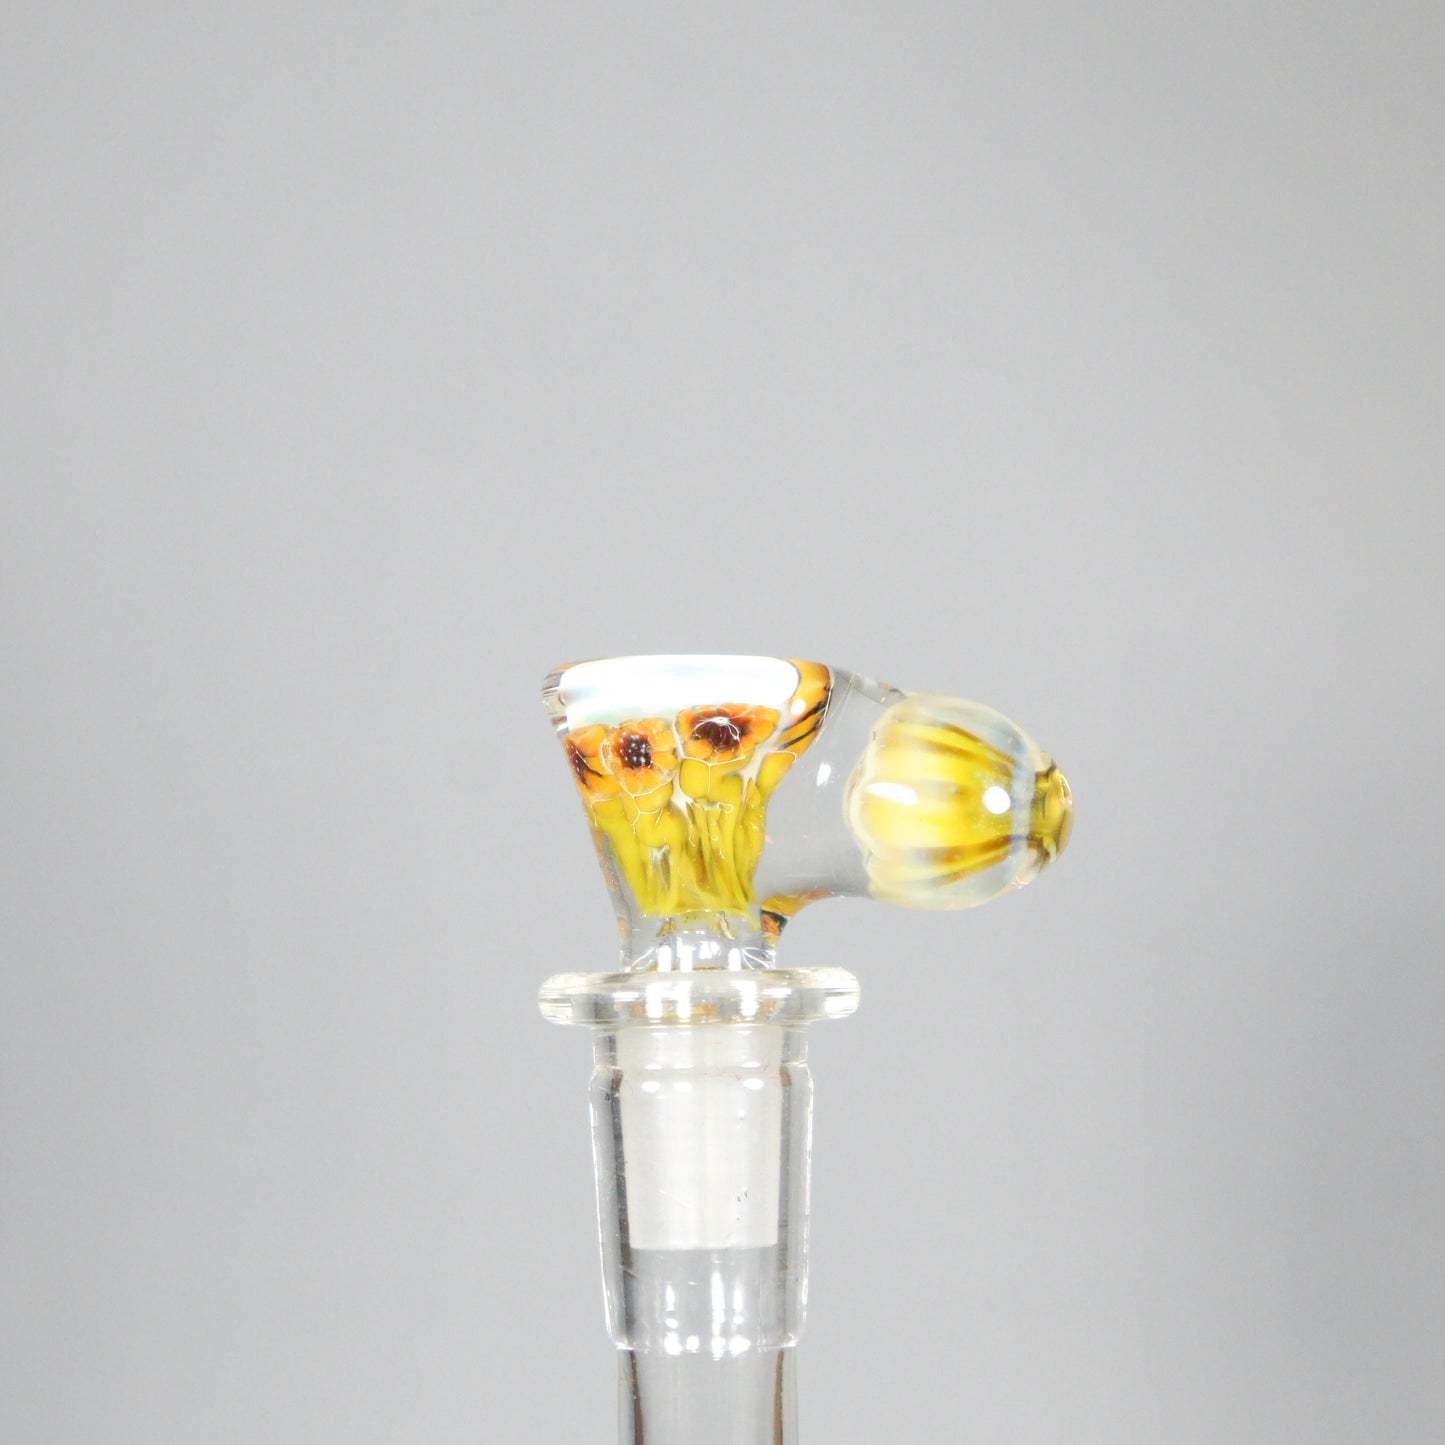 Lpz Glass - 14mm Sunflower Slide - 5